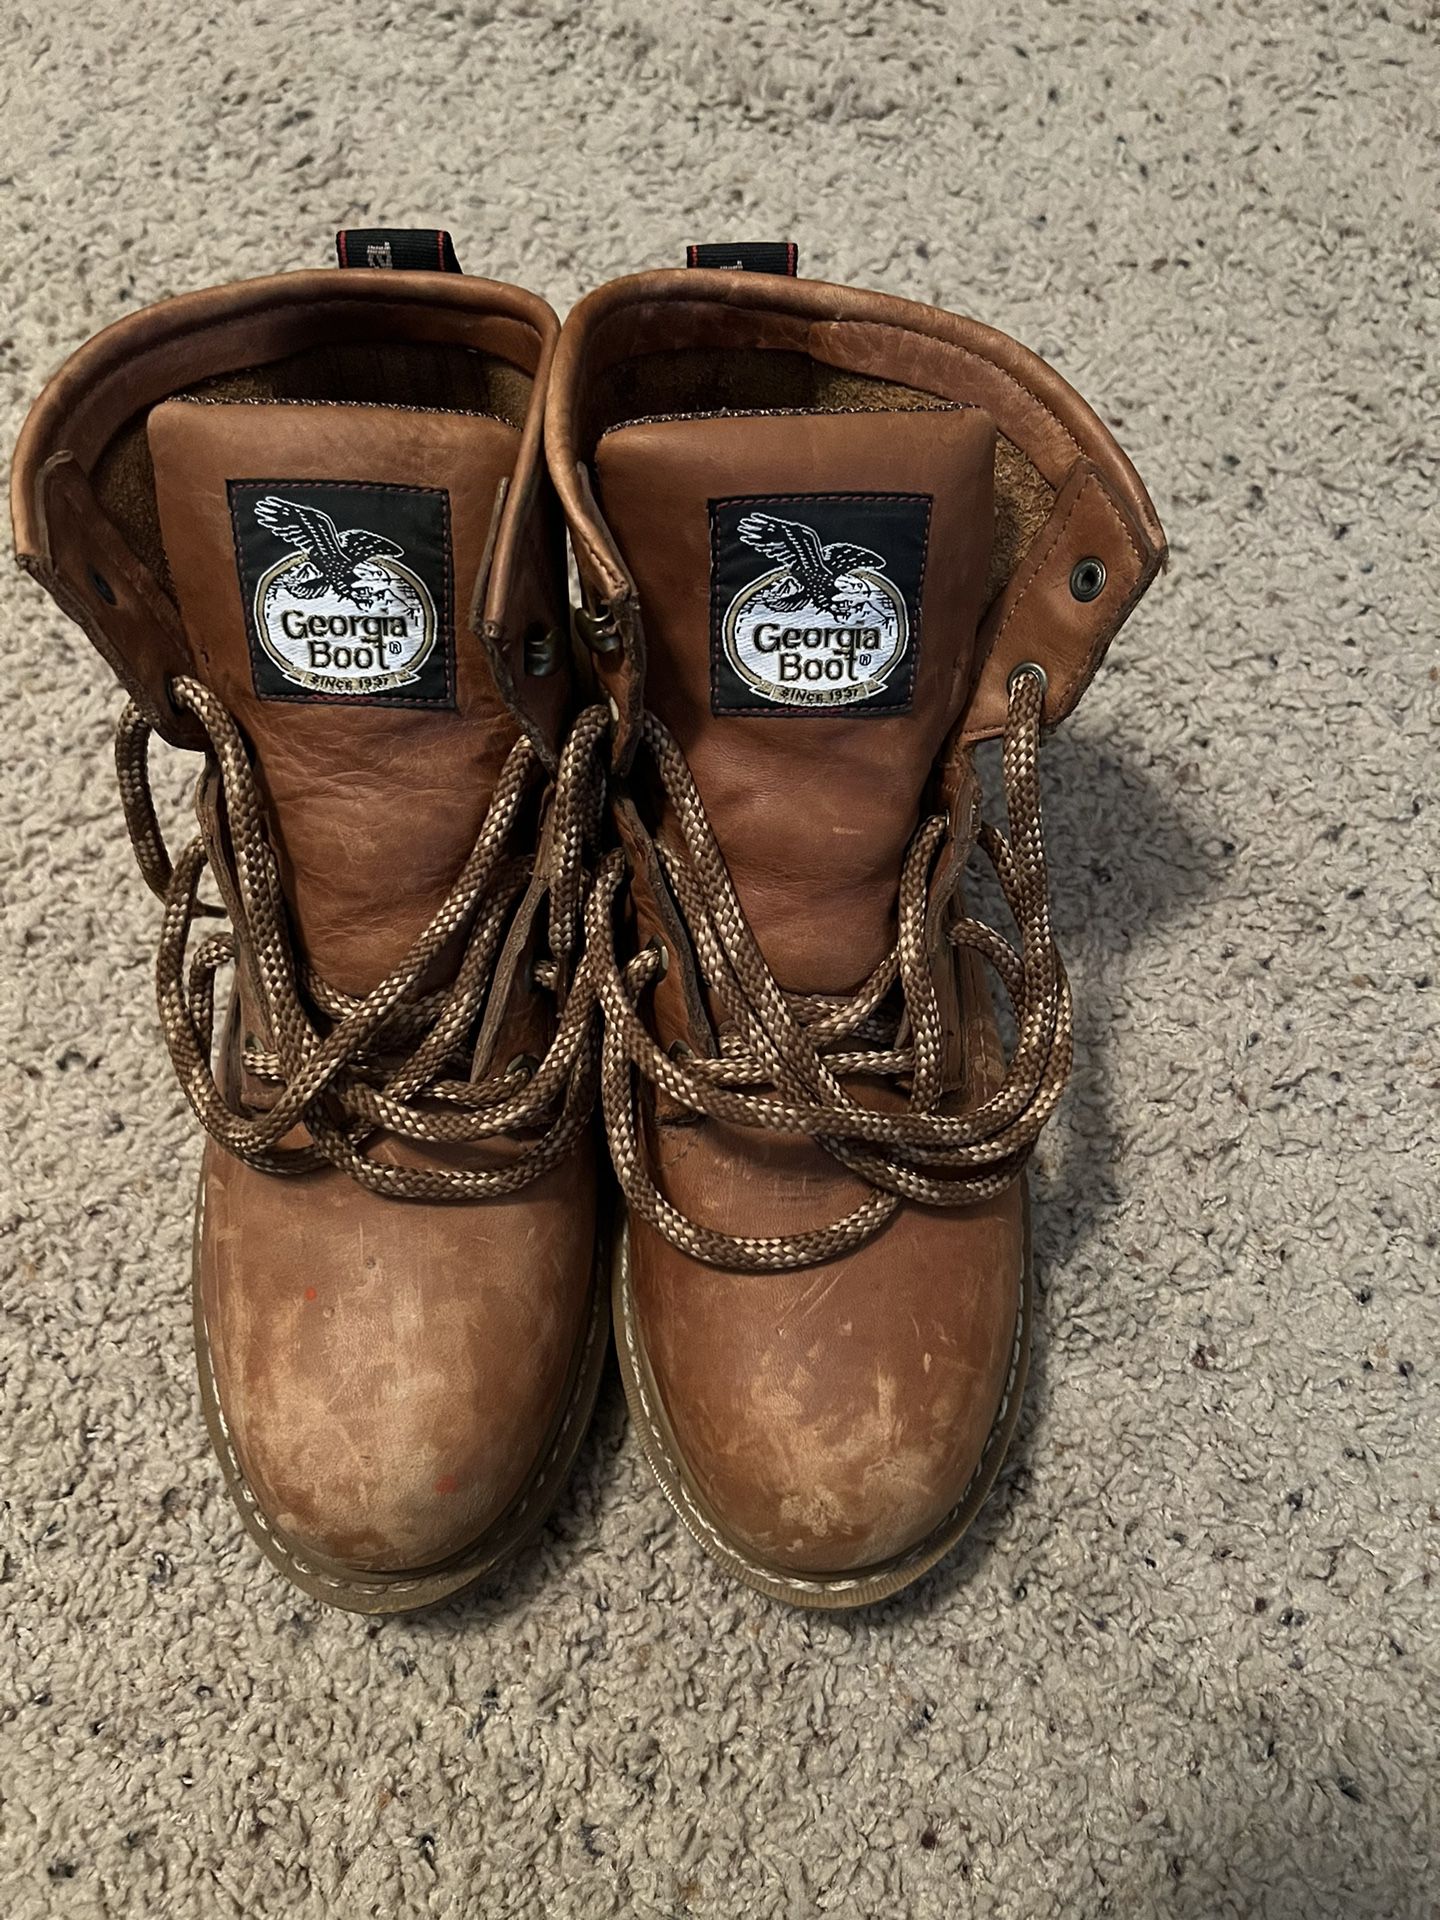 Georgia Steel Toe Work Boots Size 9